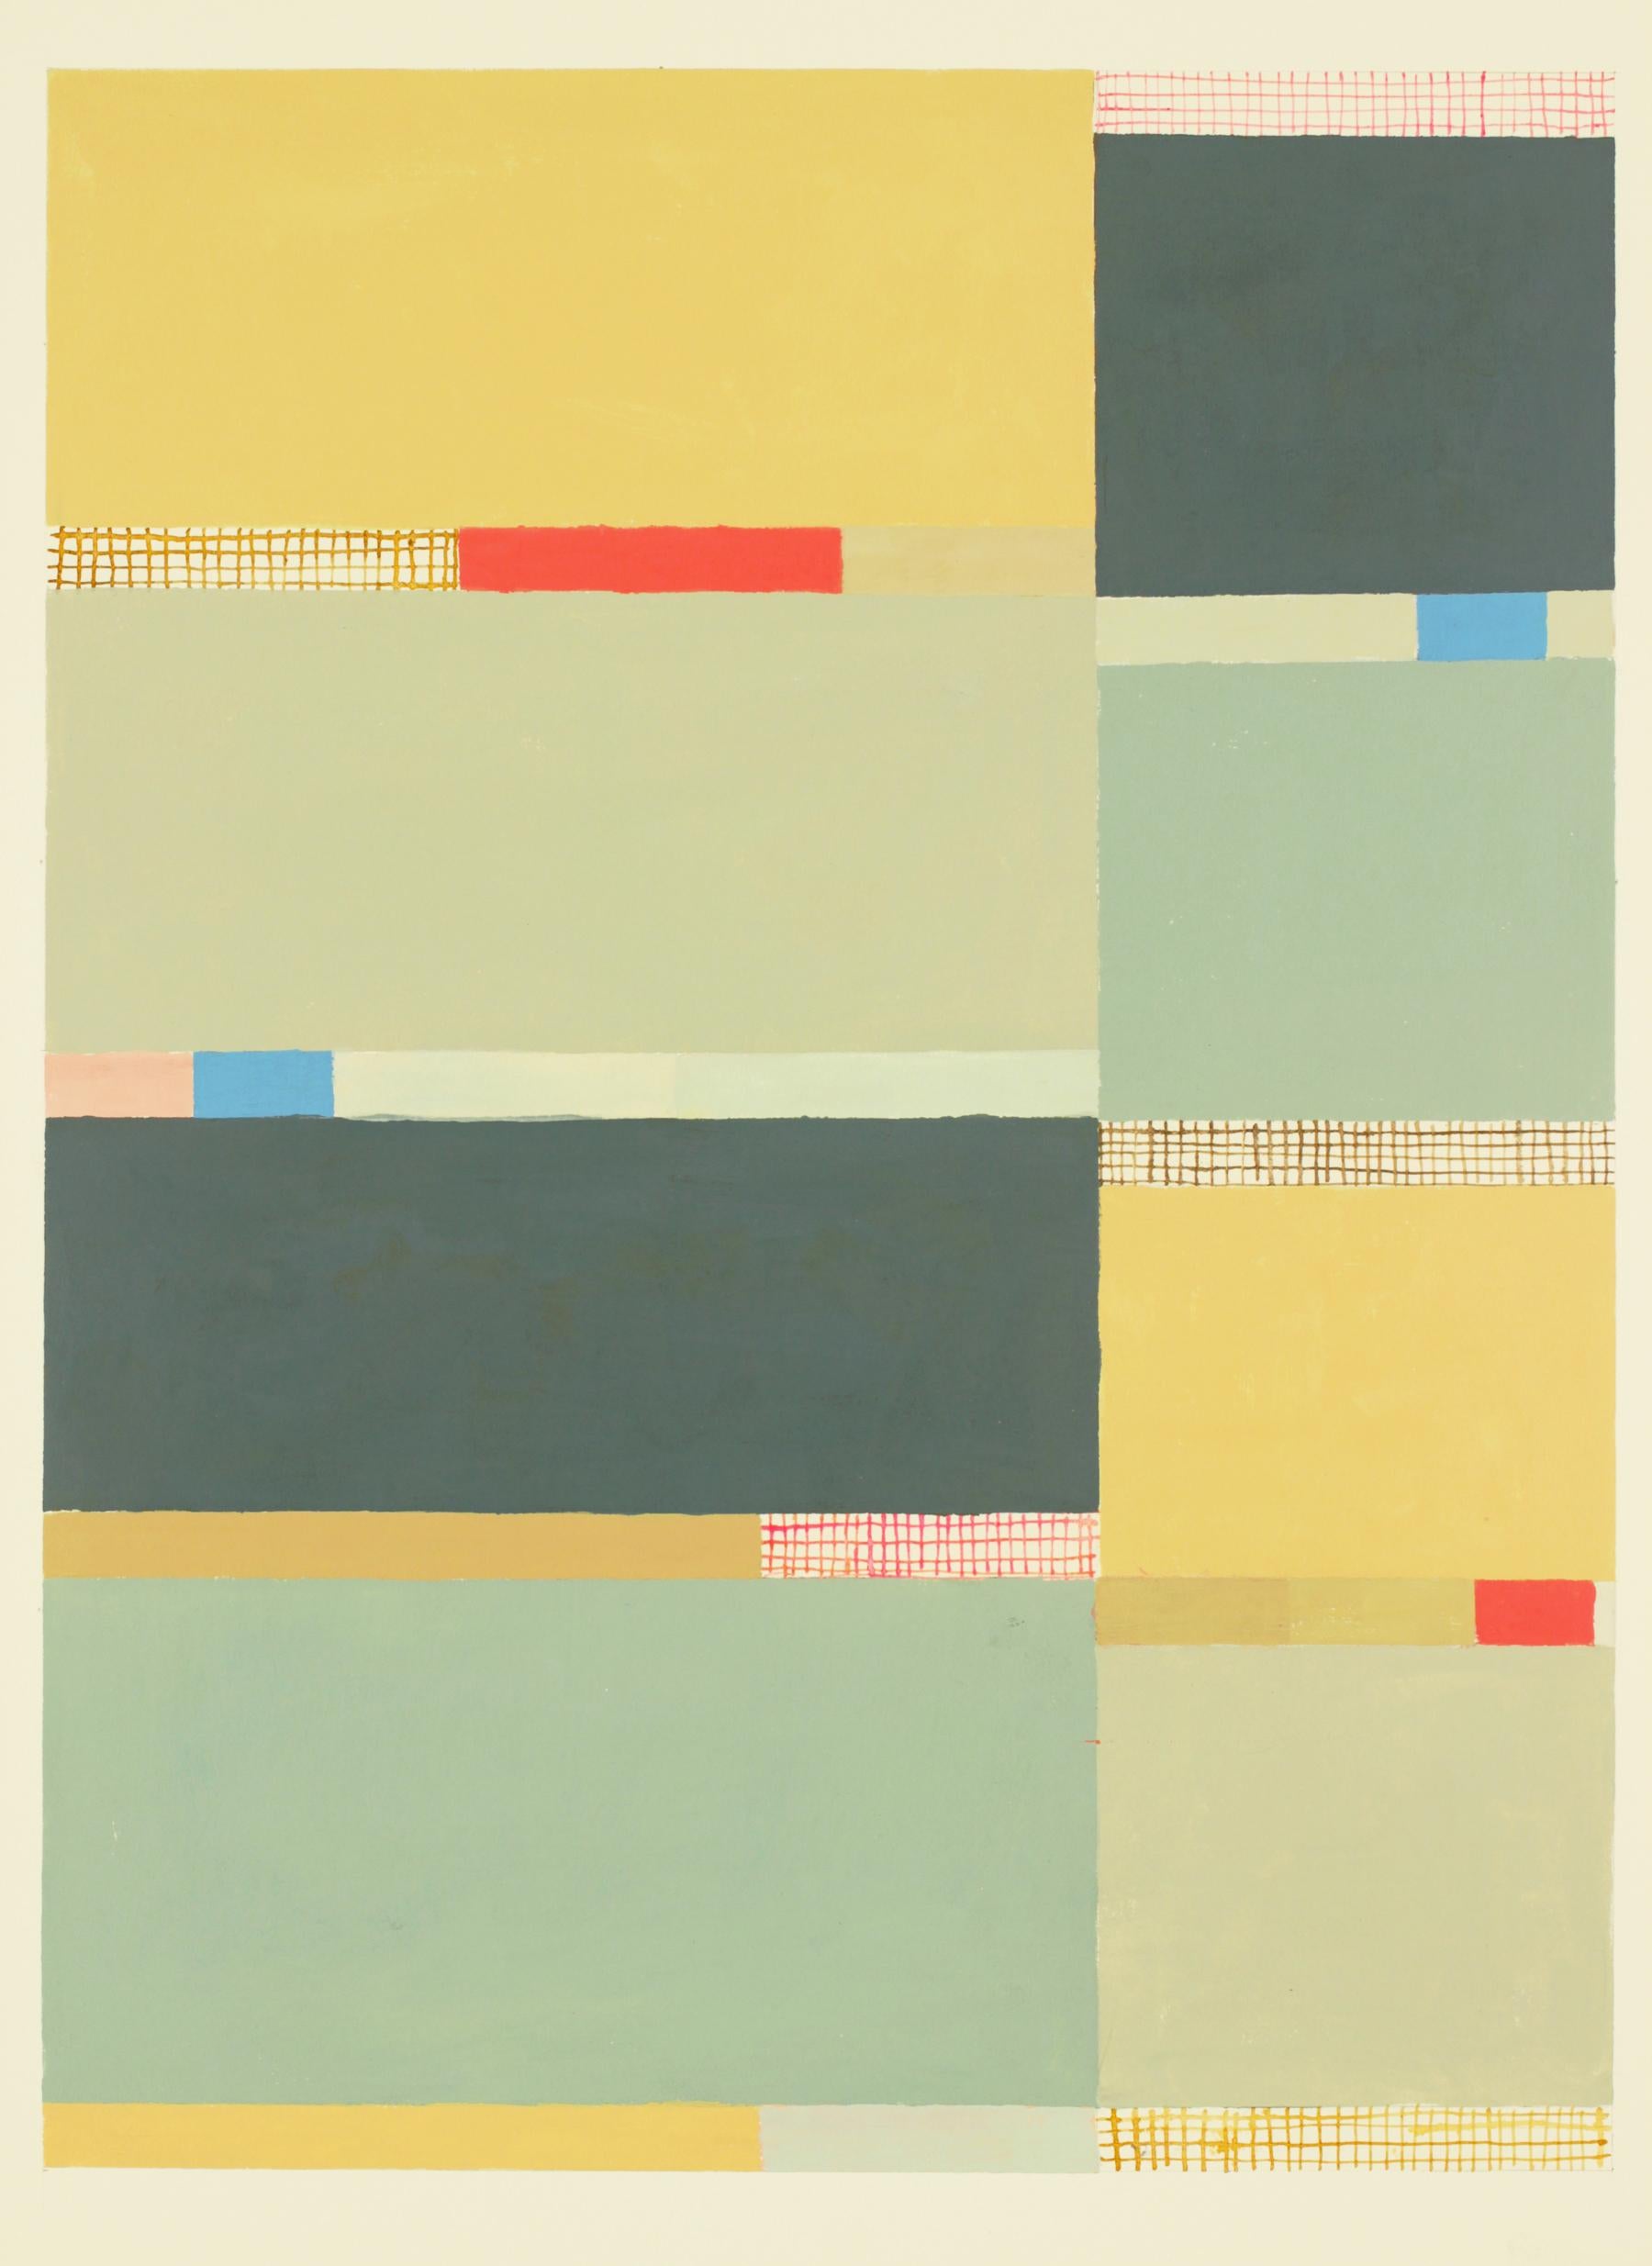 Abstract Painting Elizabeth Gourlay - Peinture abstraite sur papier Goldochregray crème, vert sauge, bleu, rouge